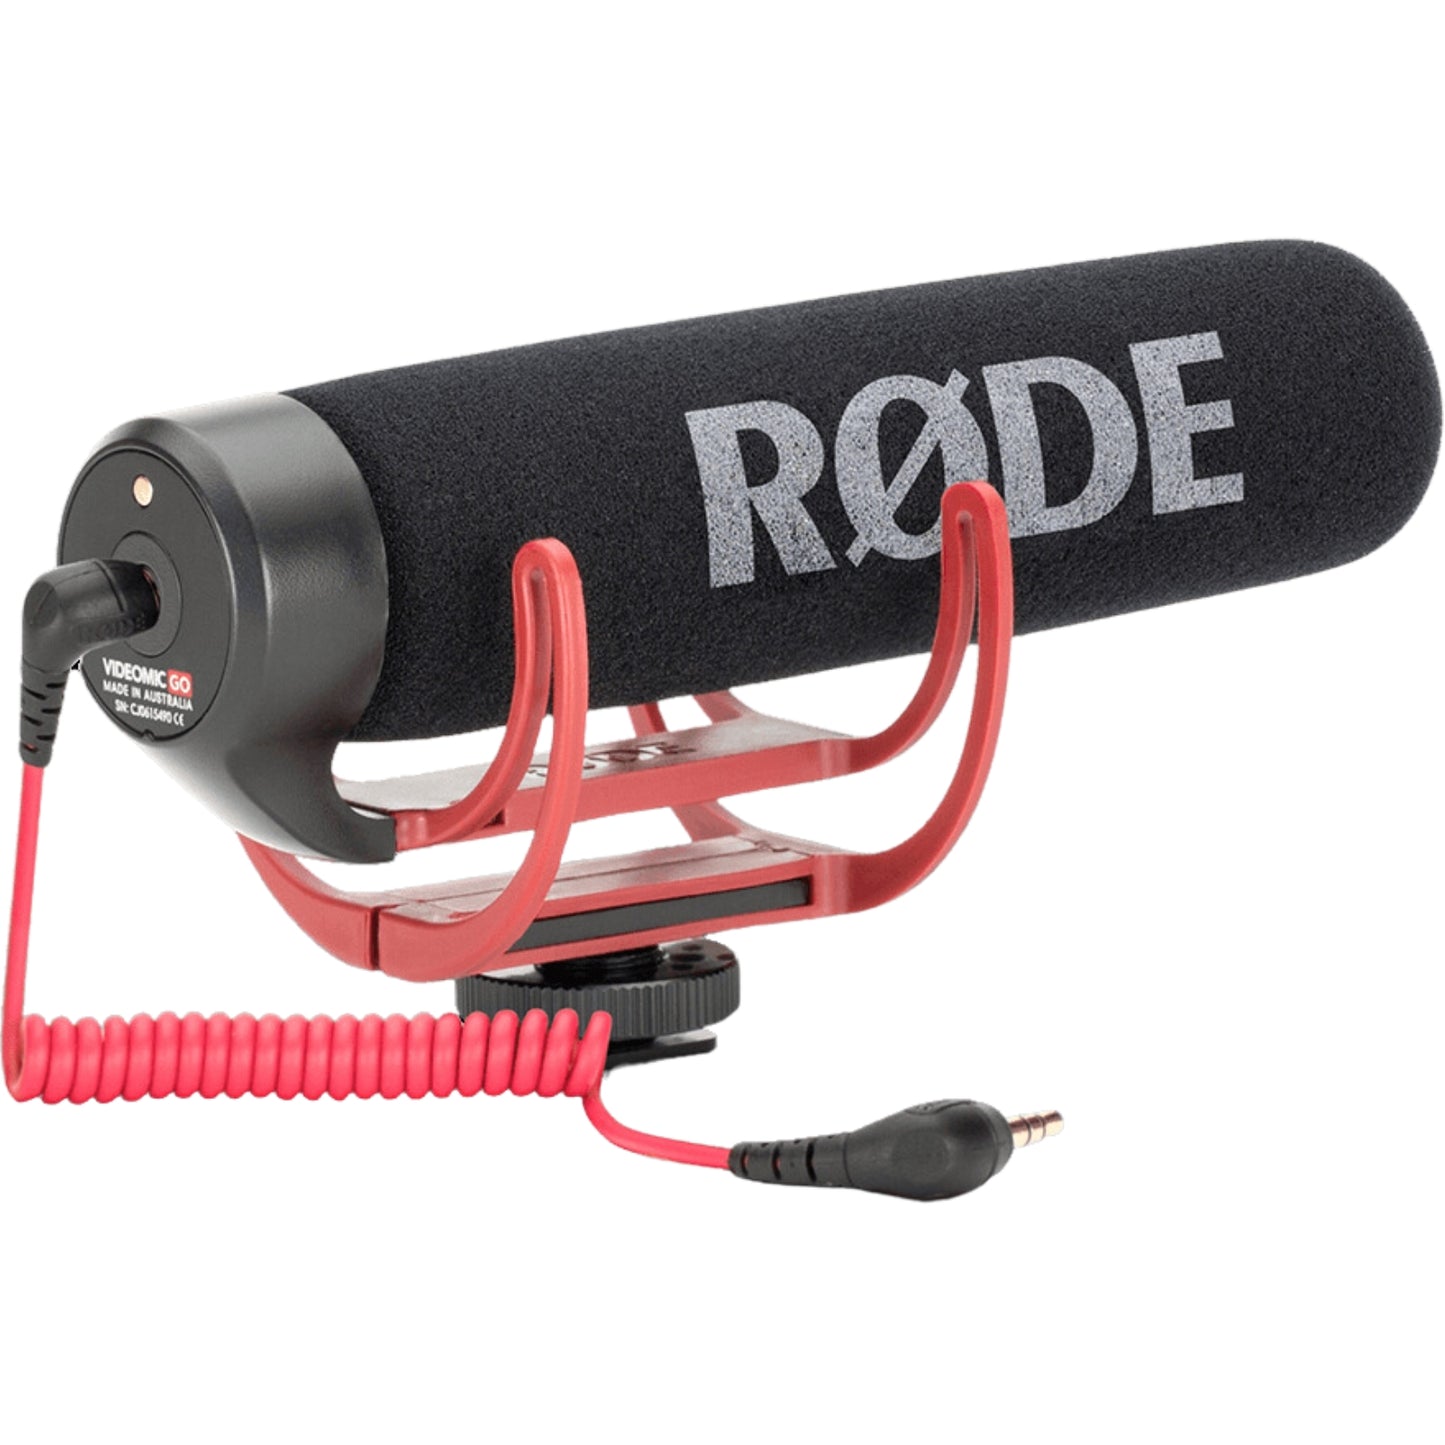 Rode VideoMic GO Camera-Mount Shotgun Microphone - MyMobile